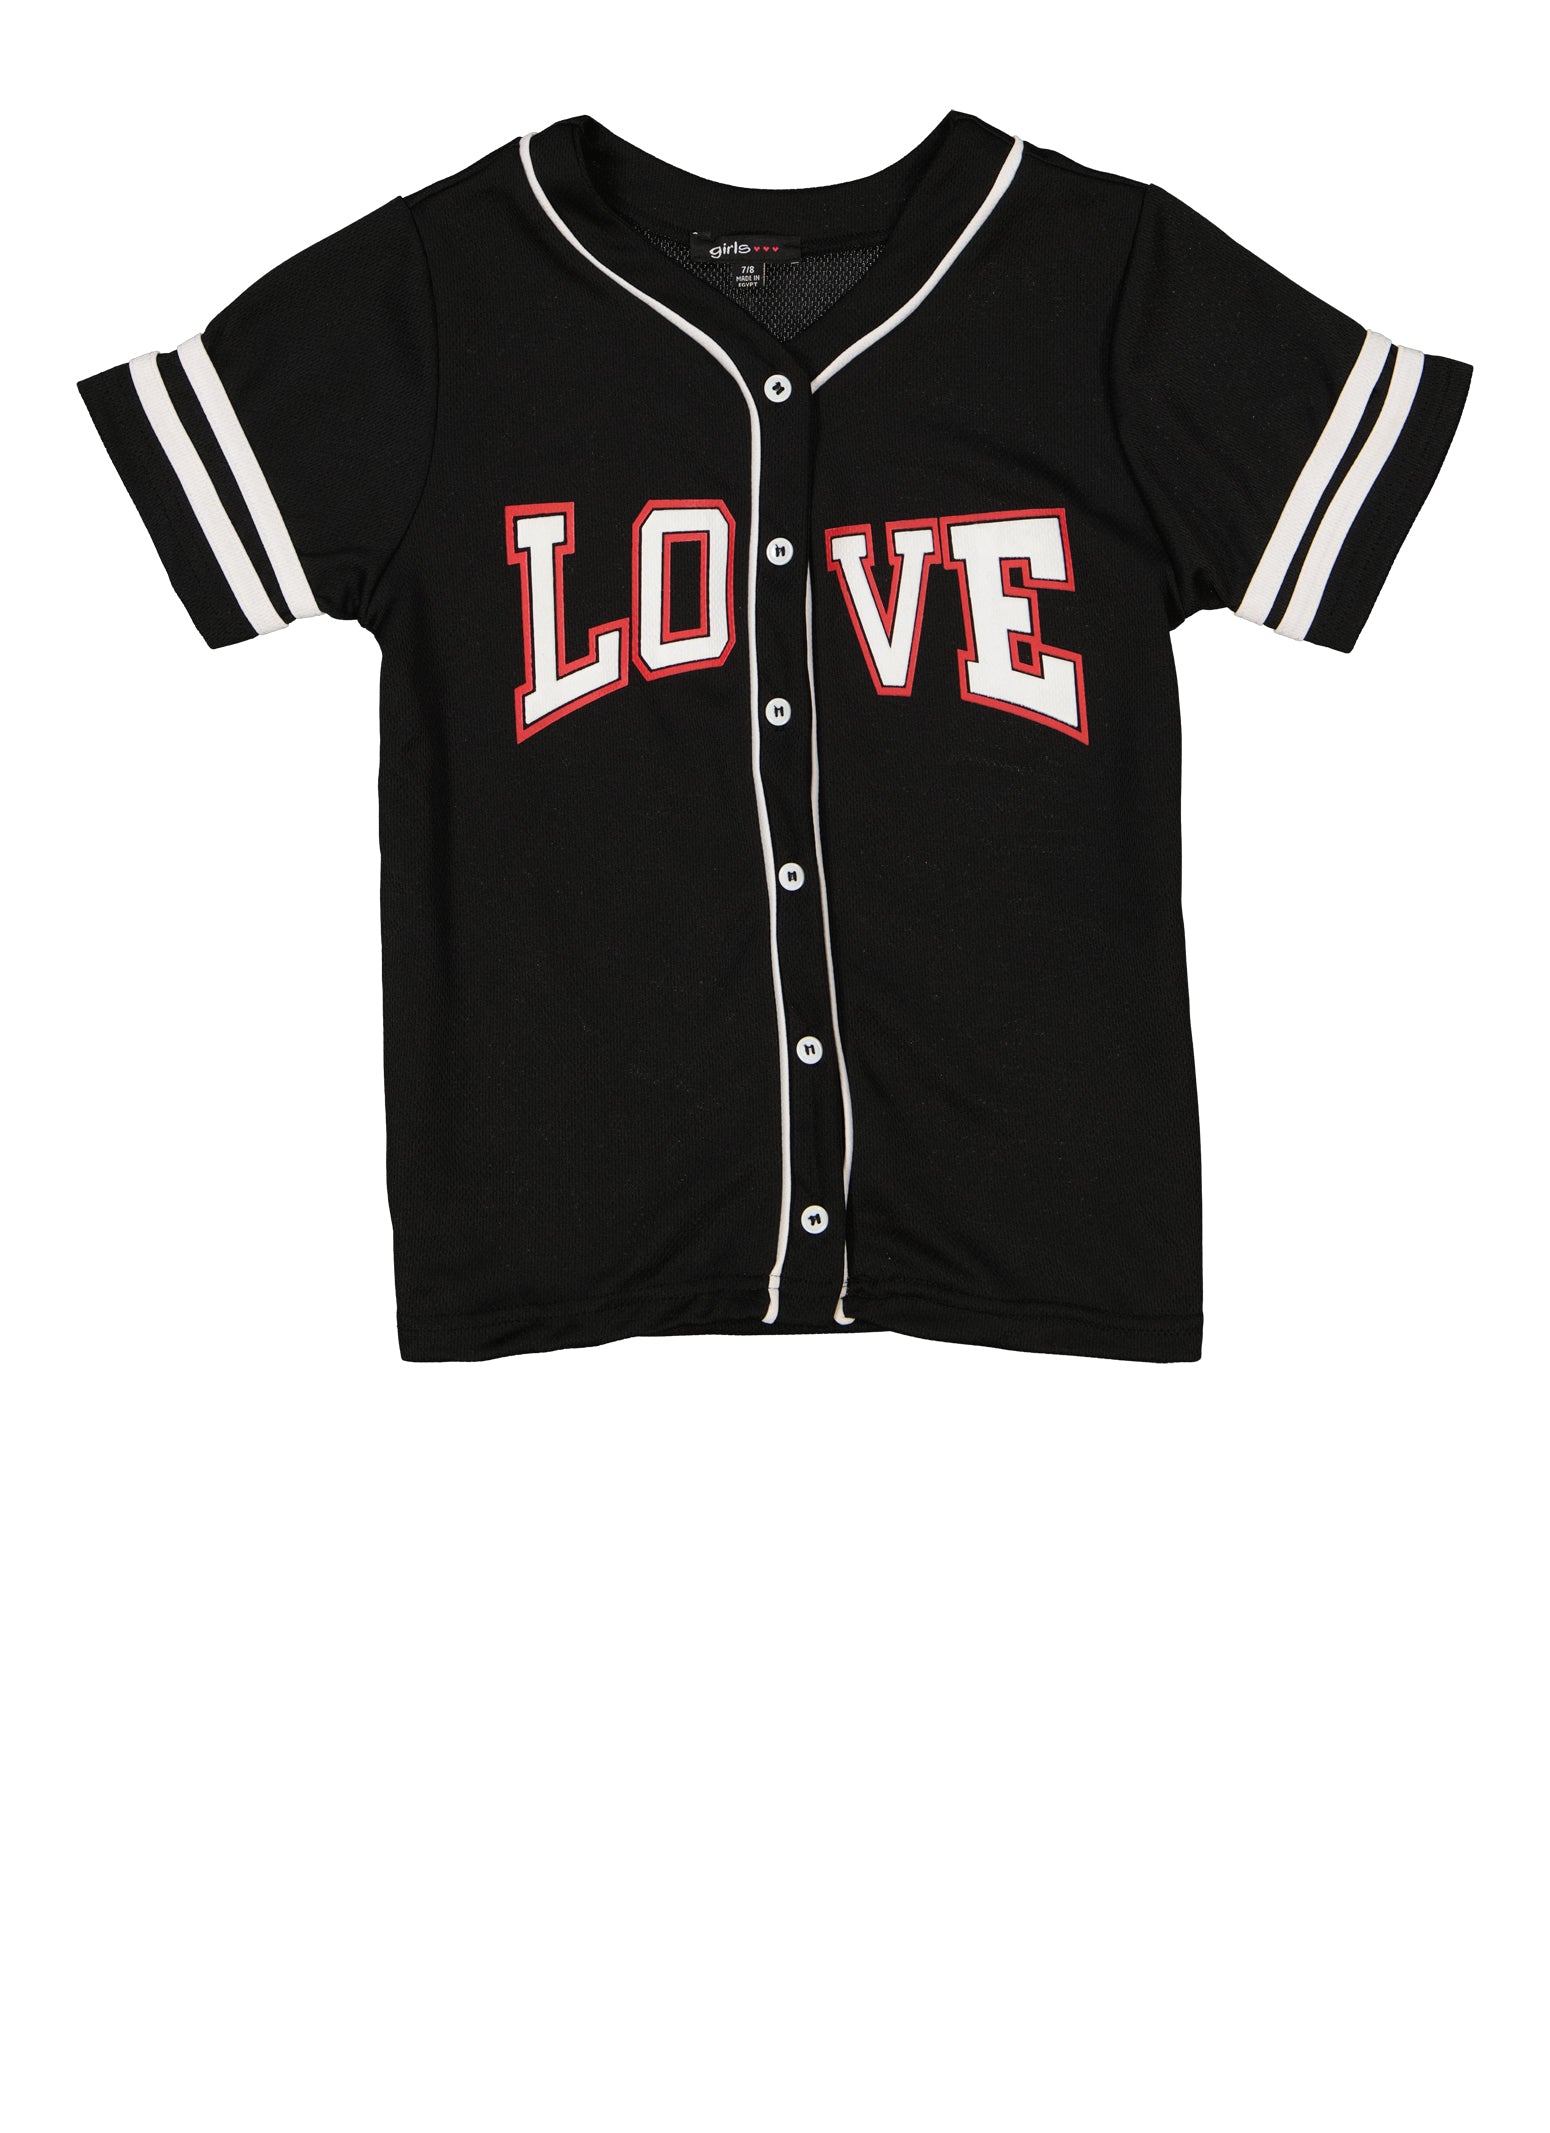 Girls Mesh Love Baseball Jersey, Black/White, Size 14-16 | Rainbow Shops